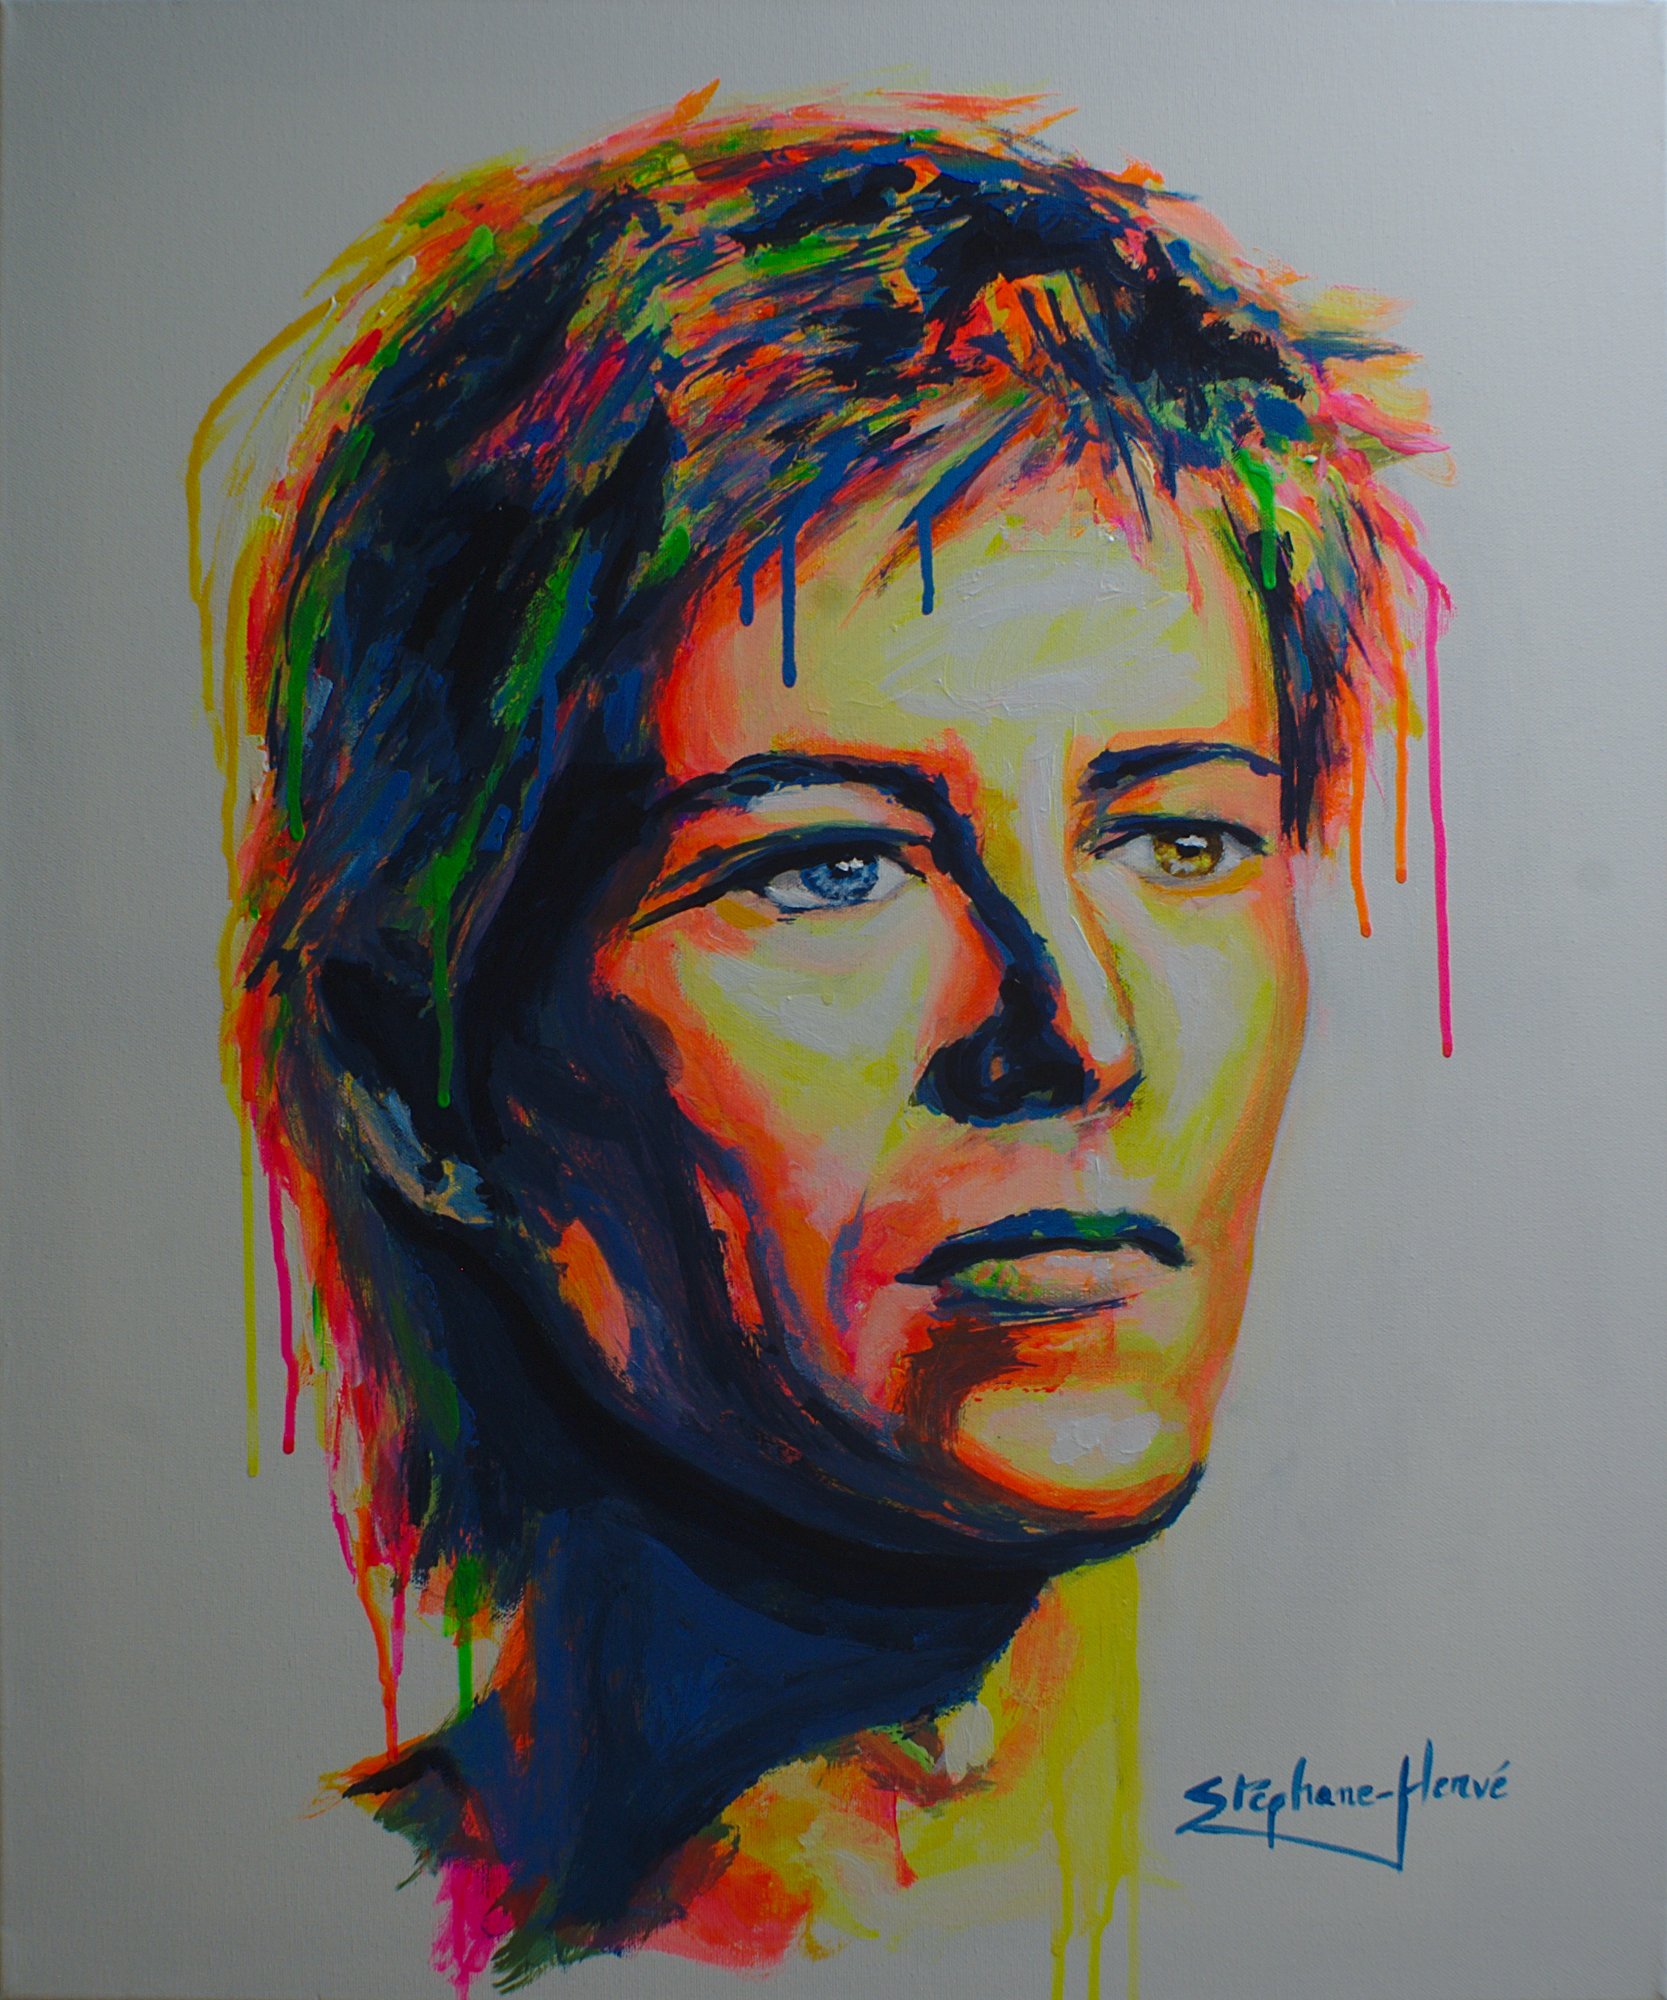 Image agrandie de David Bowie